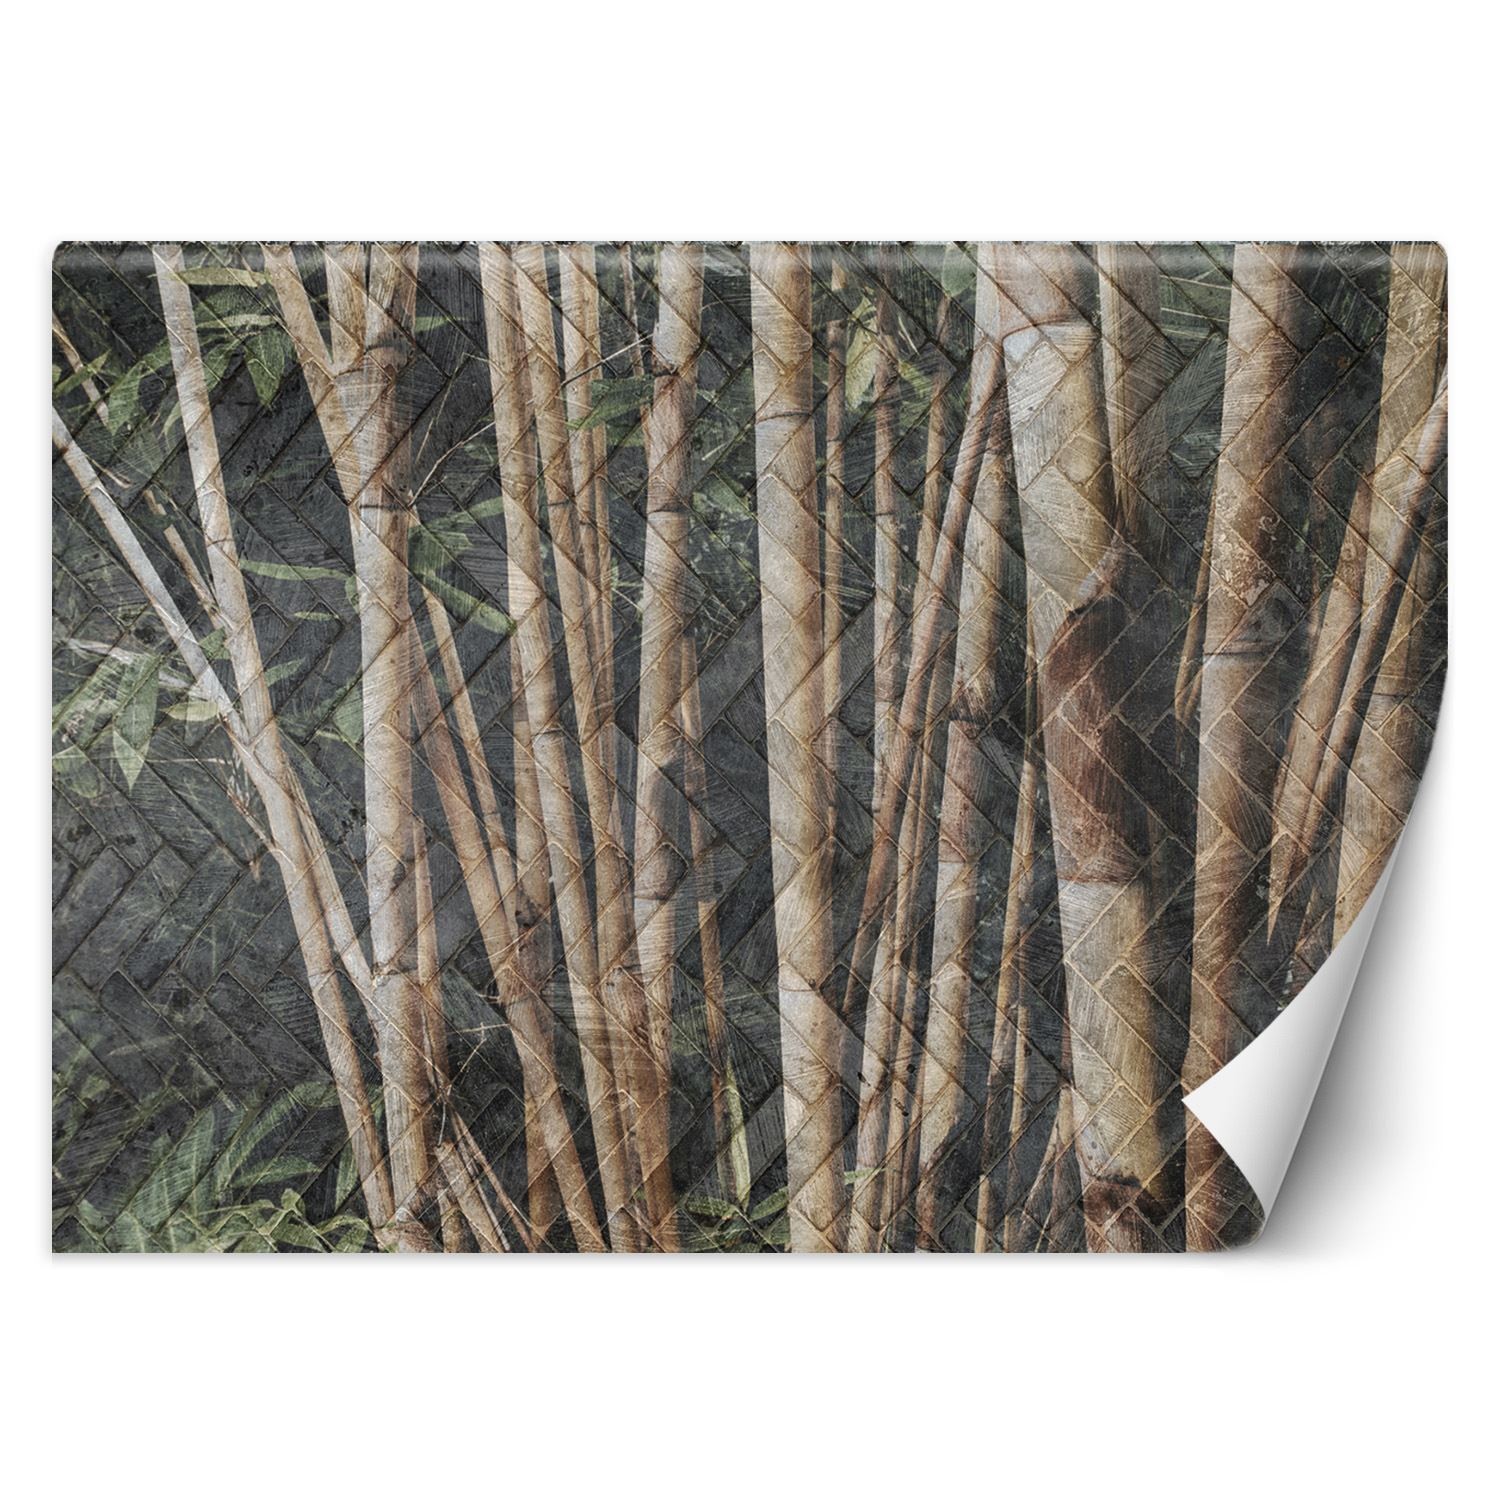 Trend24 – Behang – Bamboo Forest – Vliesbehang – Behang Woonkamer – Fotobehang – 450×315 cm – Incl. behanglijm